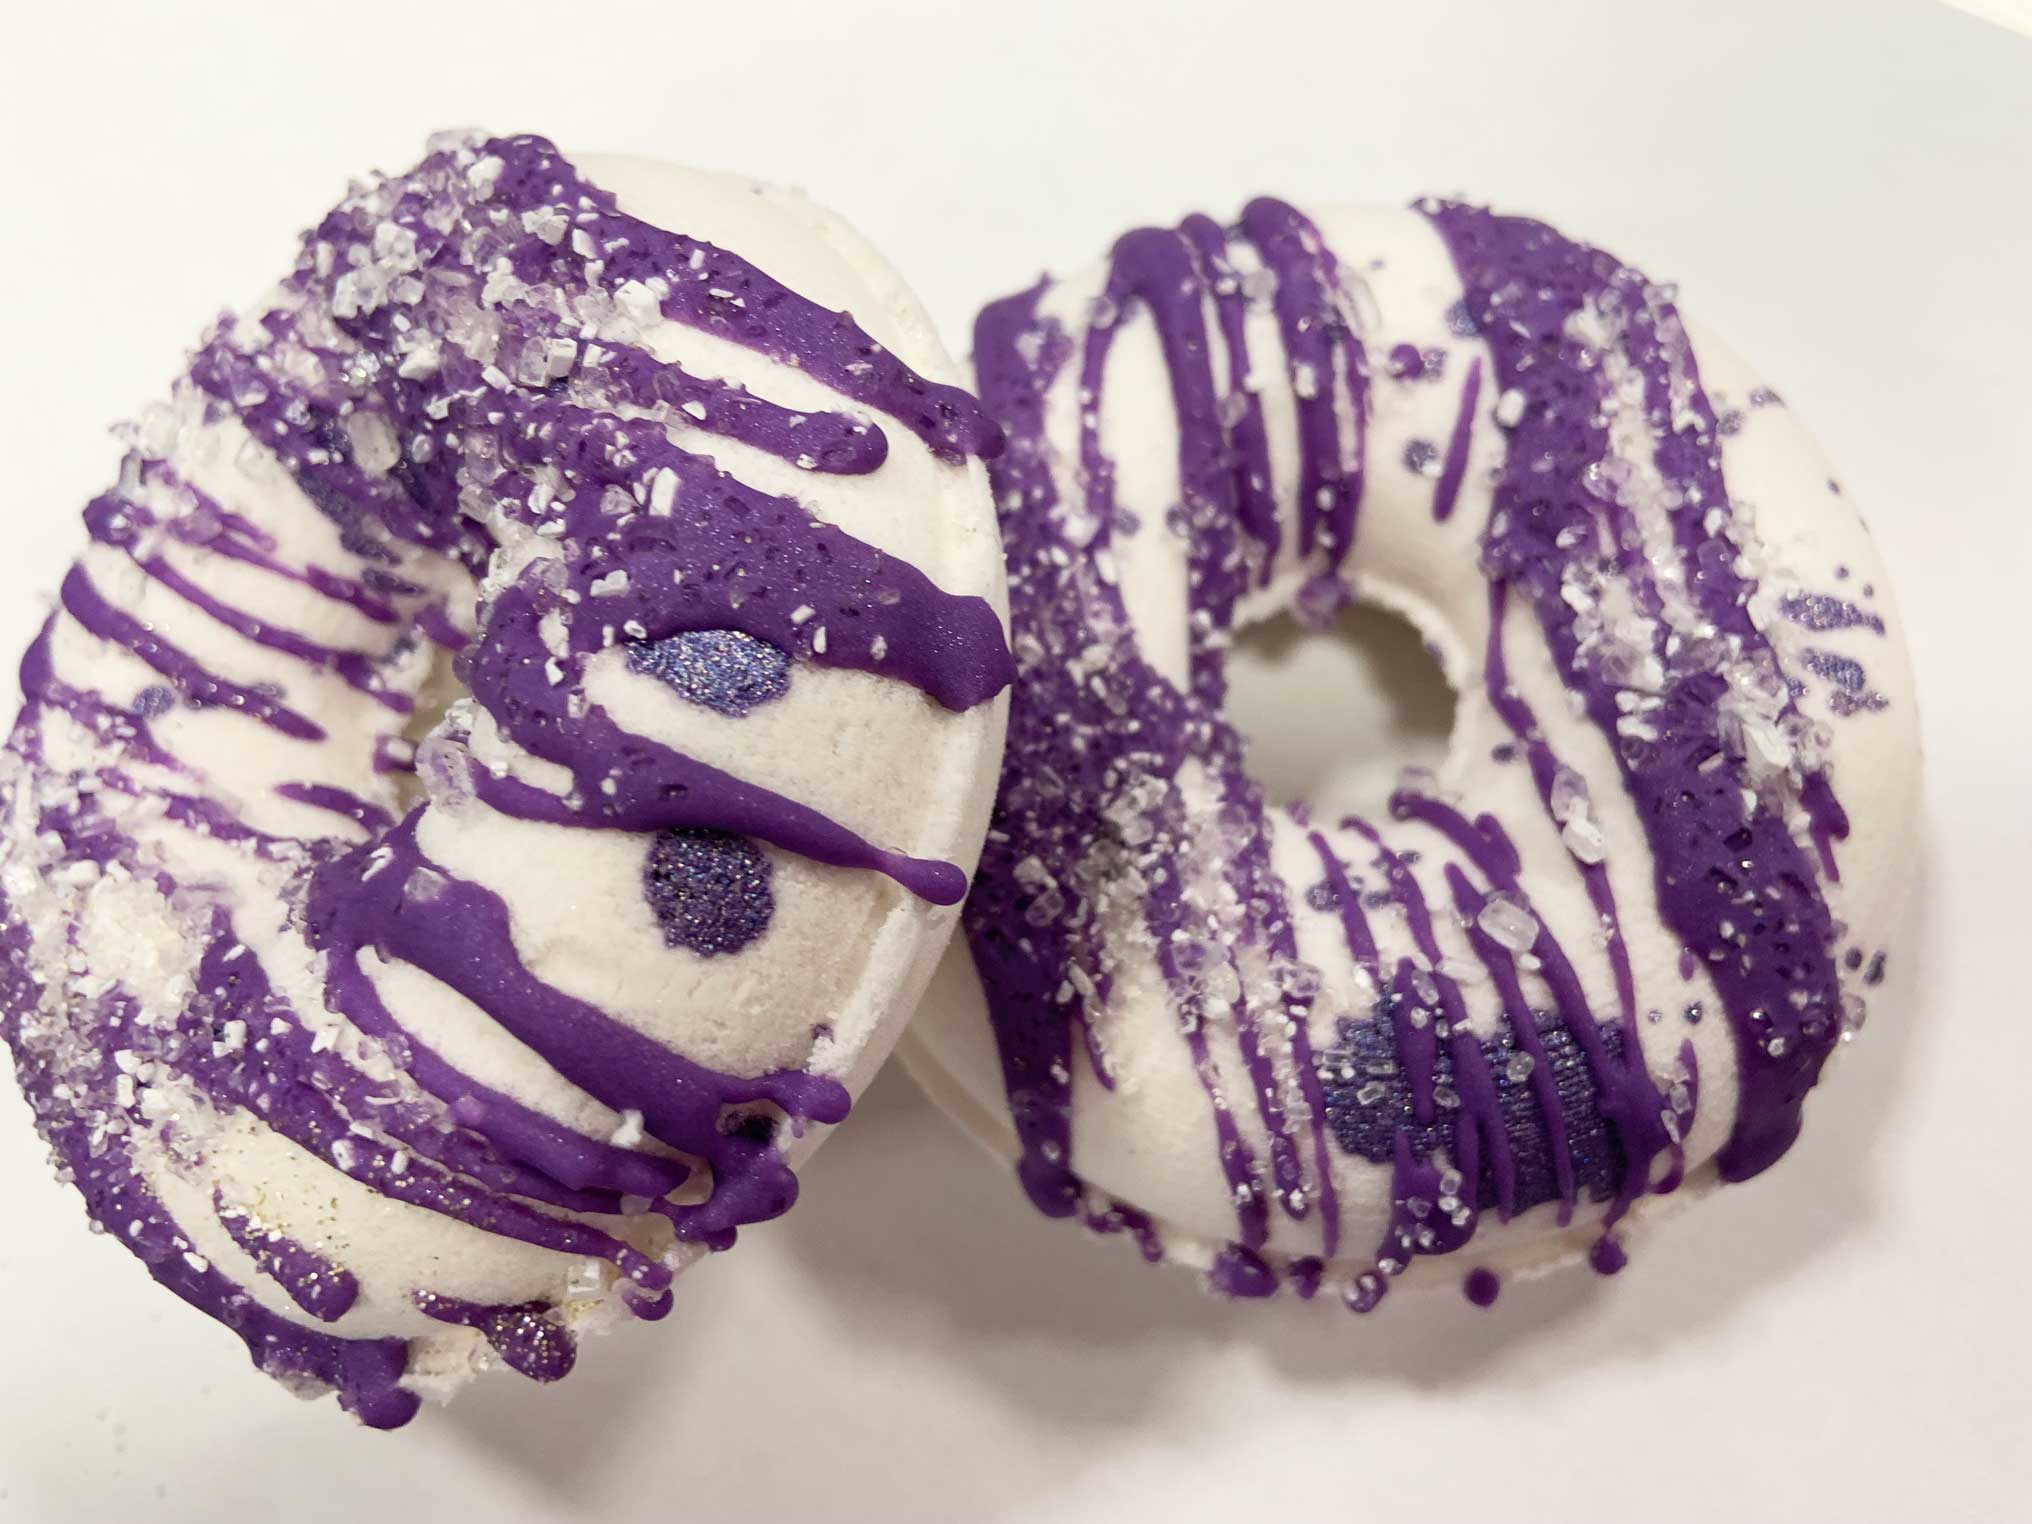 Lavender oat milk bath bomb doughnut